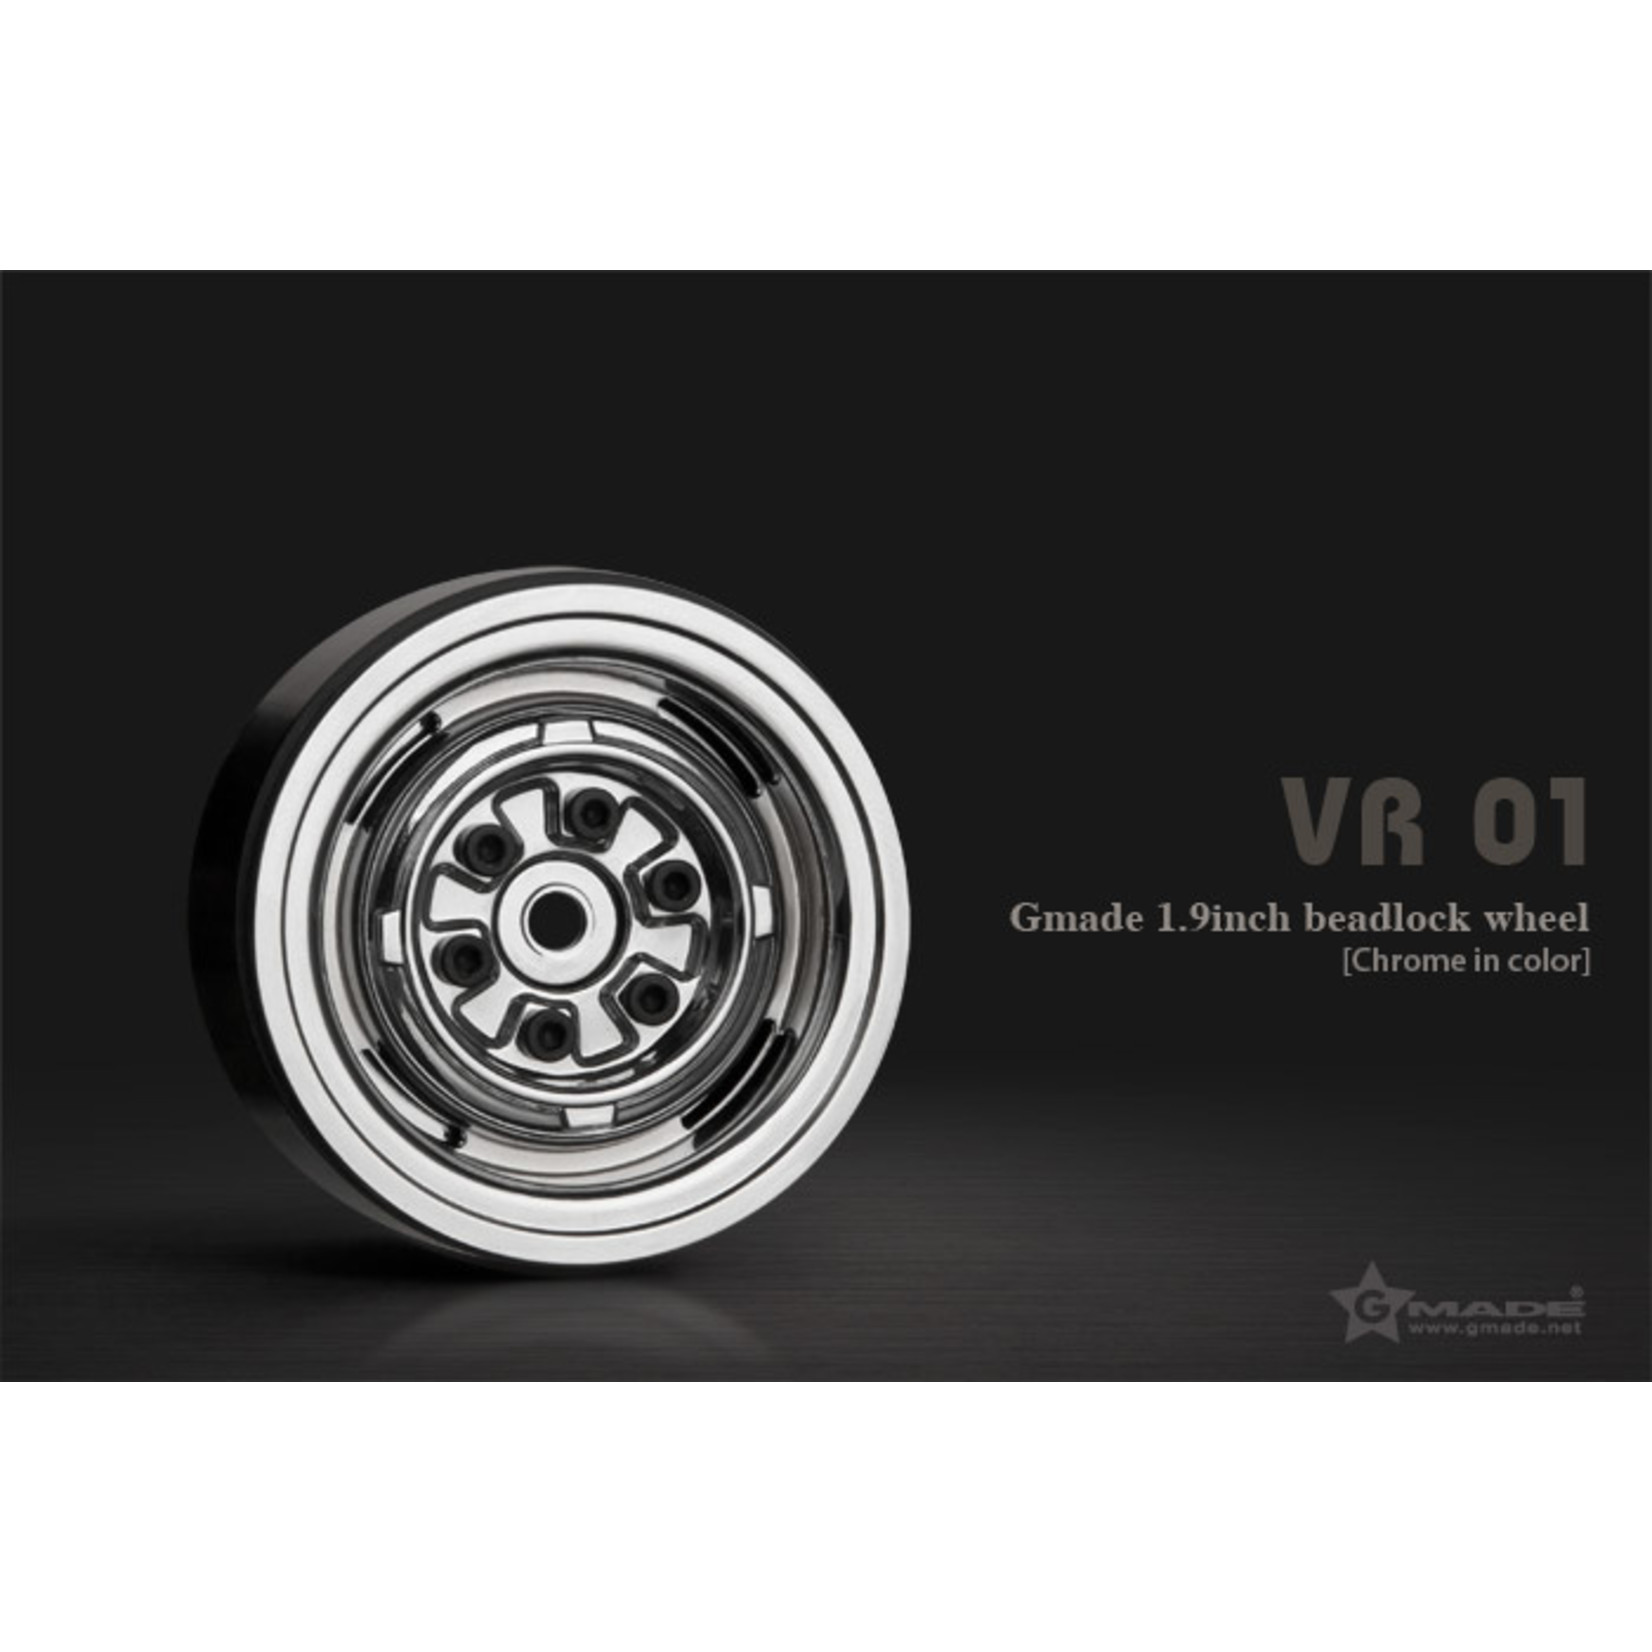 Gmade 1.9 VR01 Beadlock Wheels (Chrome) (2)